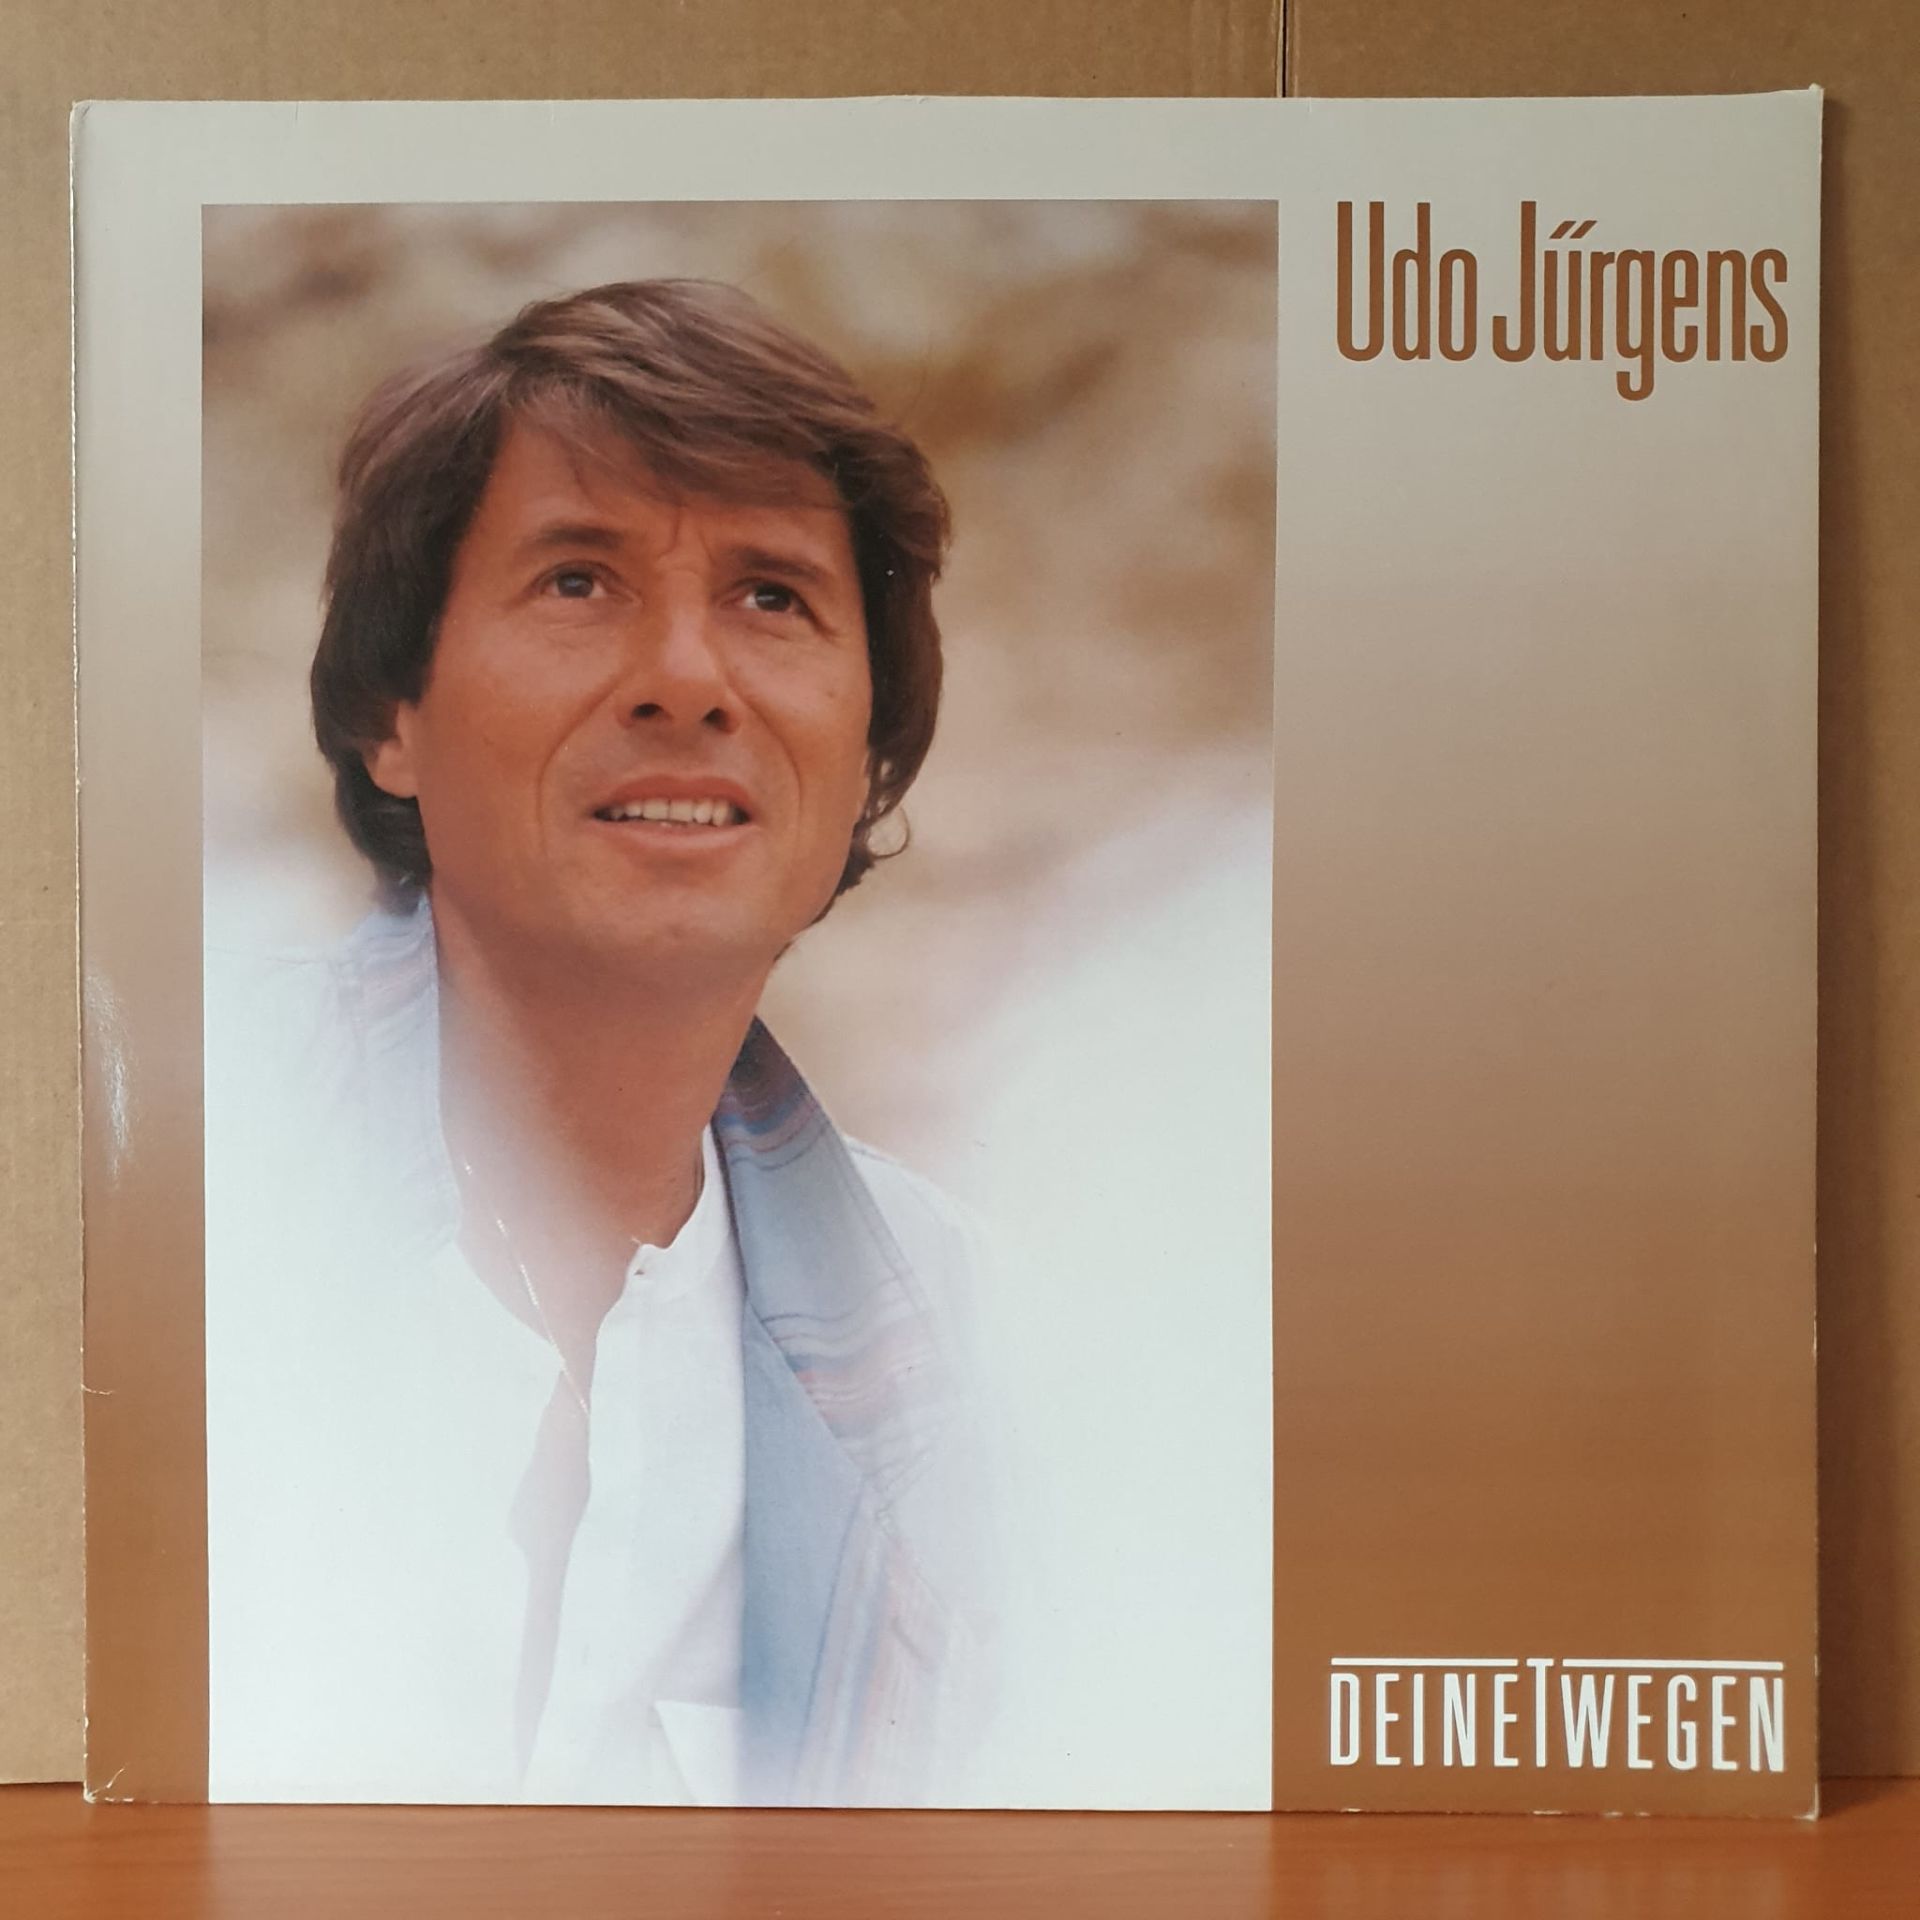 UDO JURGENS - DEINETWEGEN (1986) - LP 2.EL PLAK